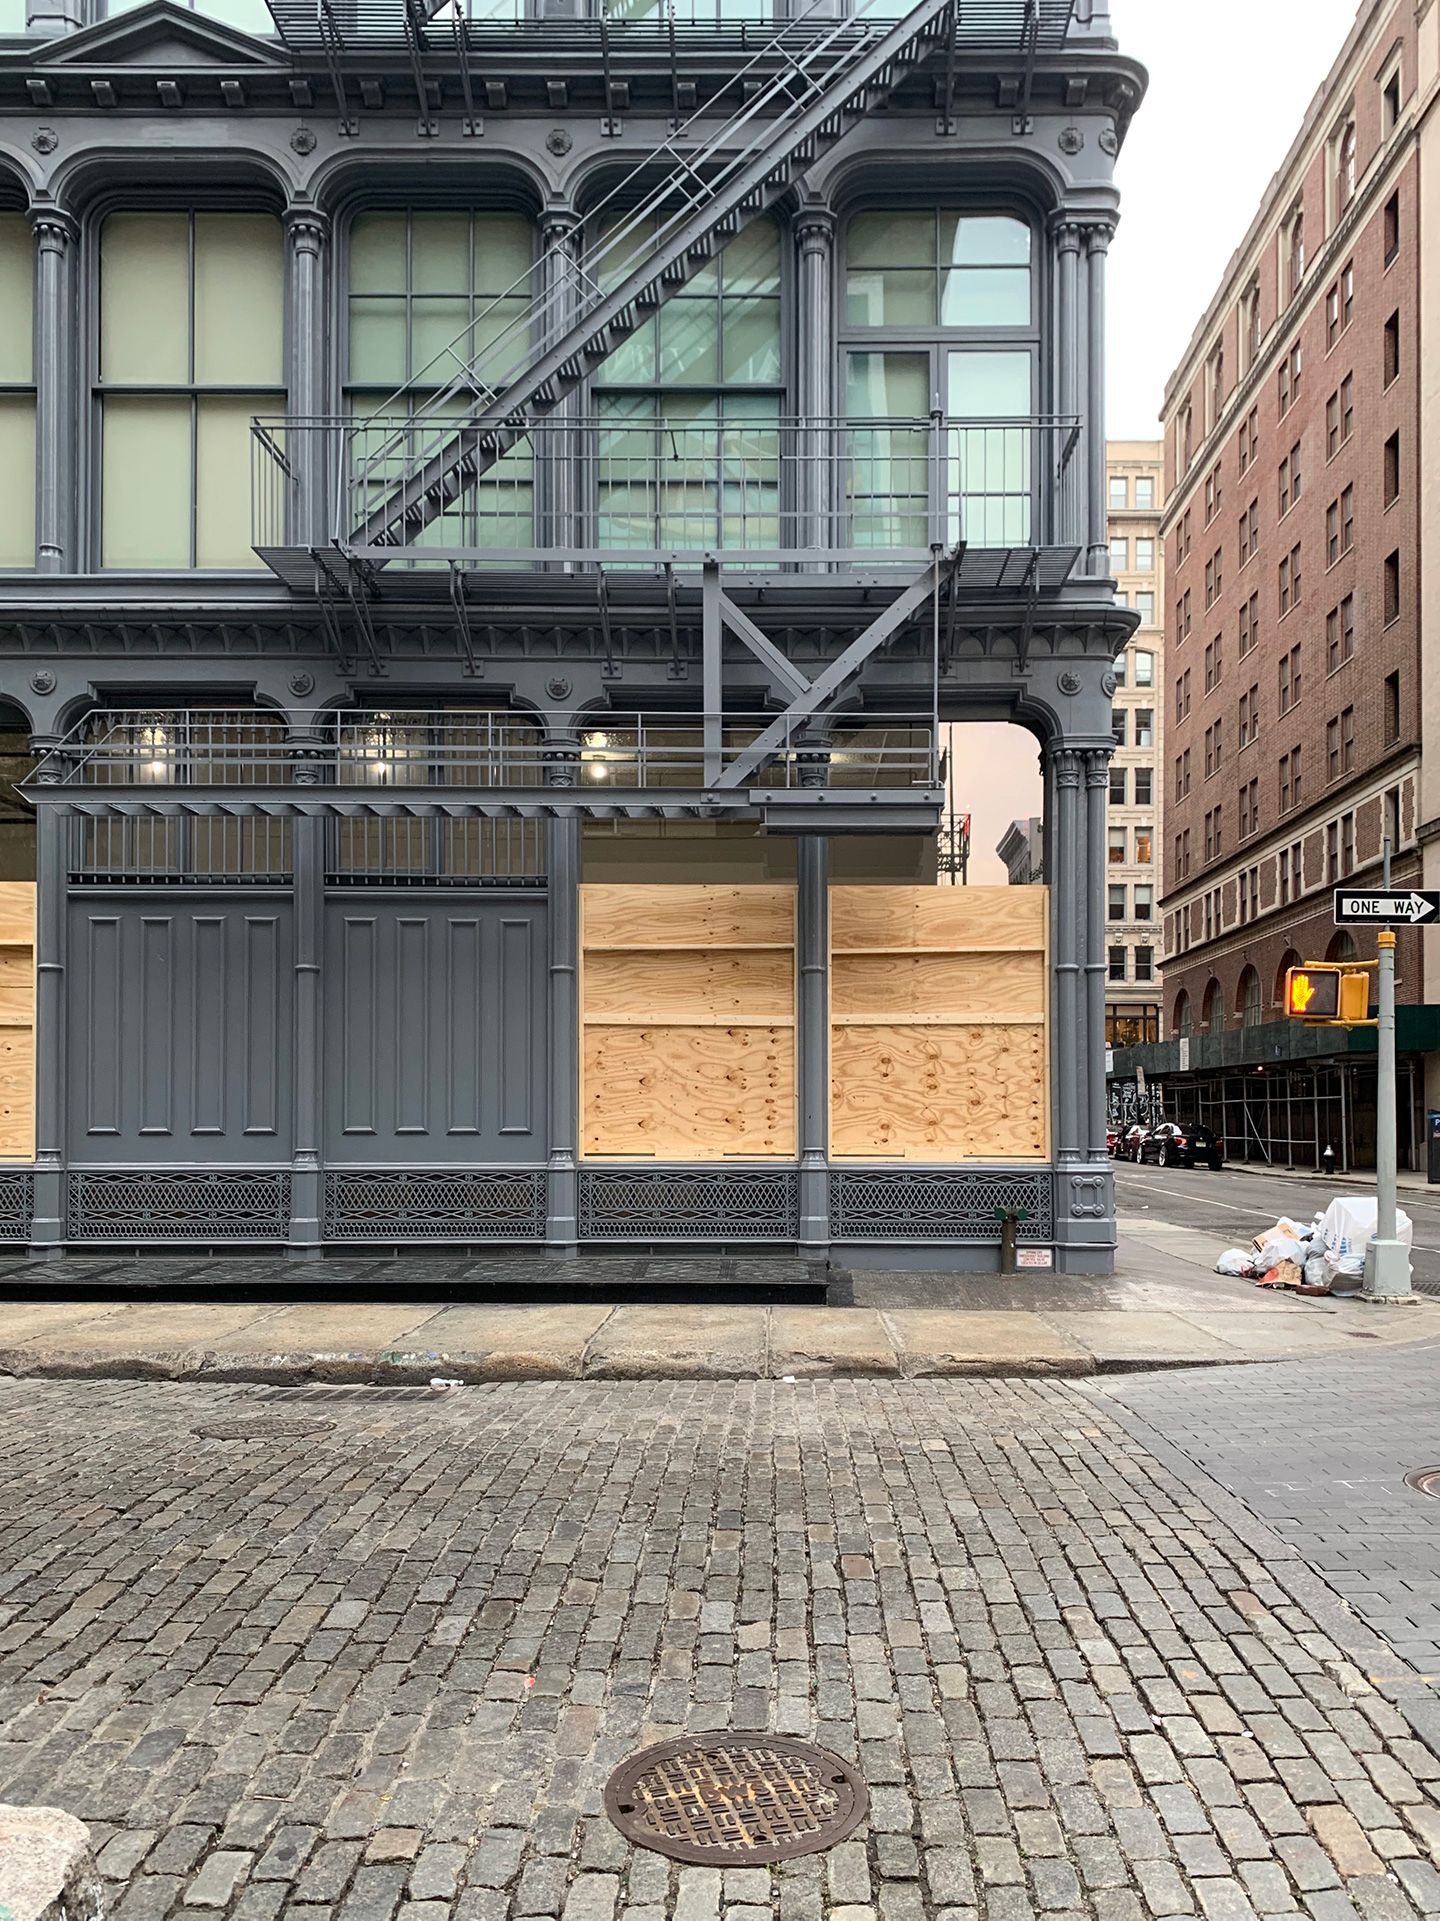 Judd Foundation, Soho, Manhattan, New York City, June 4, 2020. © Lucie Rebeyrol 